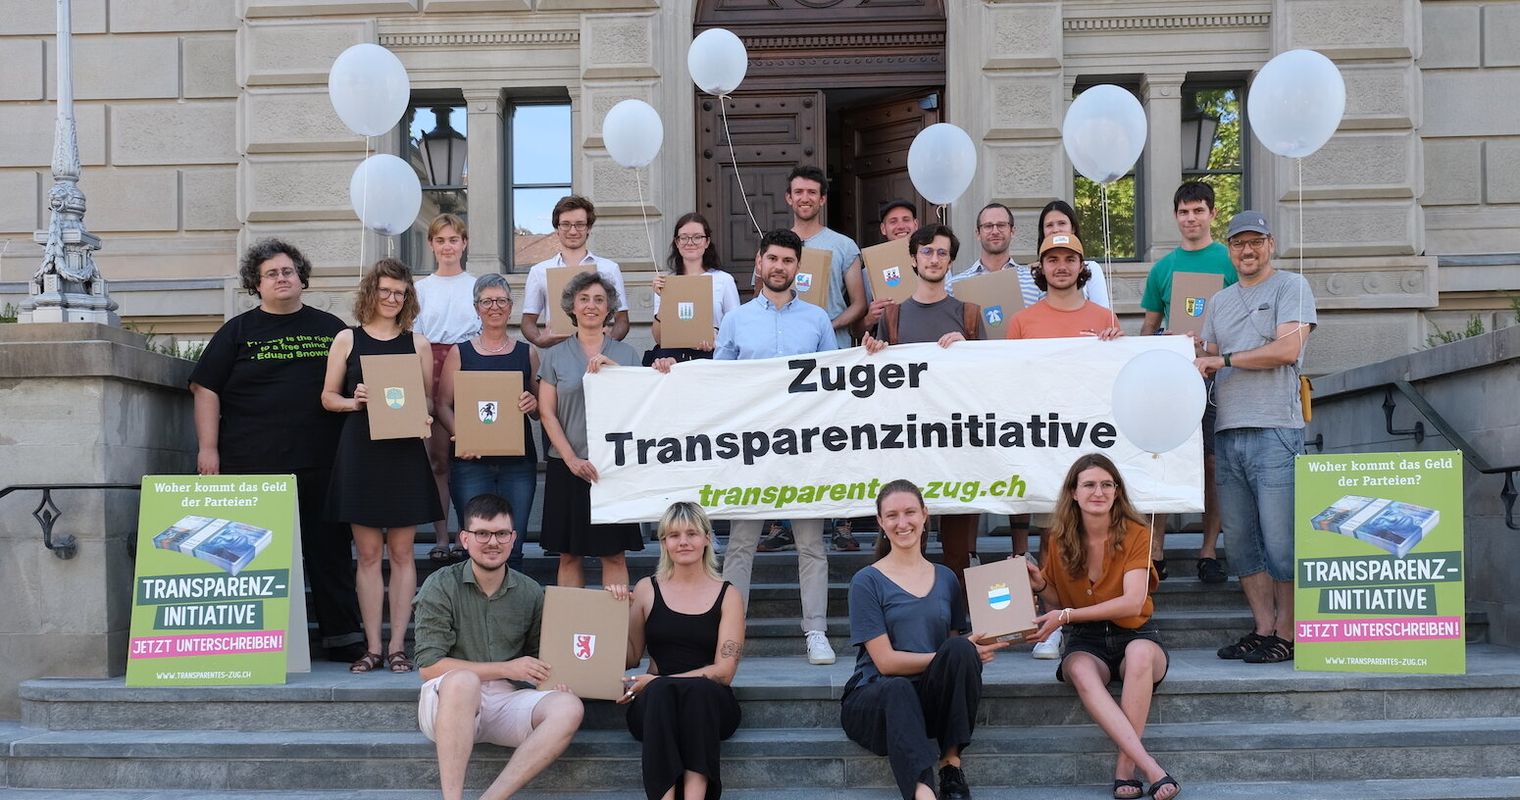 Zuger Kantonsrat: Transparenzinitiative erhält Gegenvorschlag